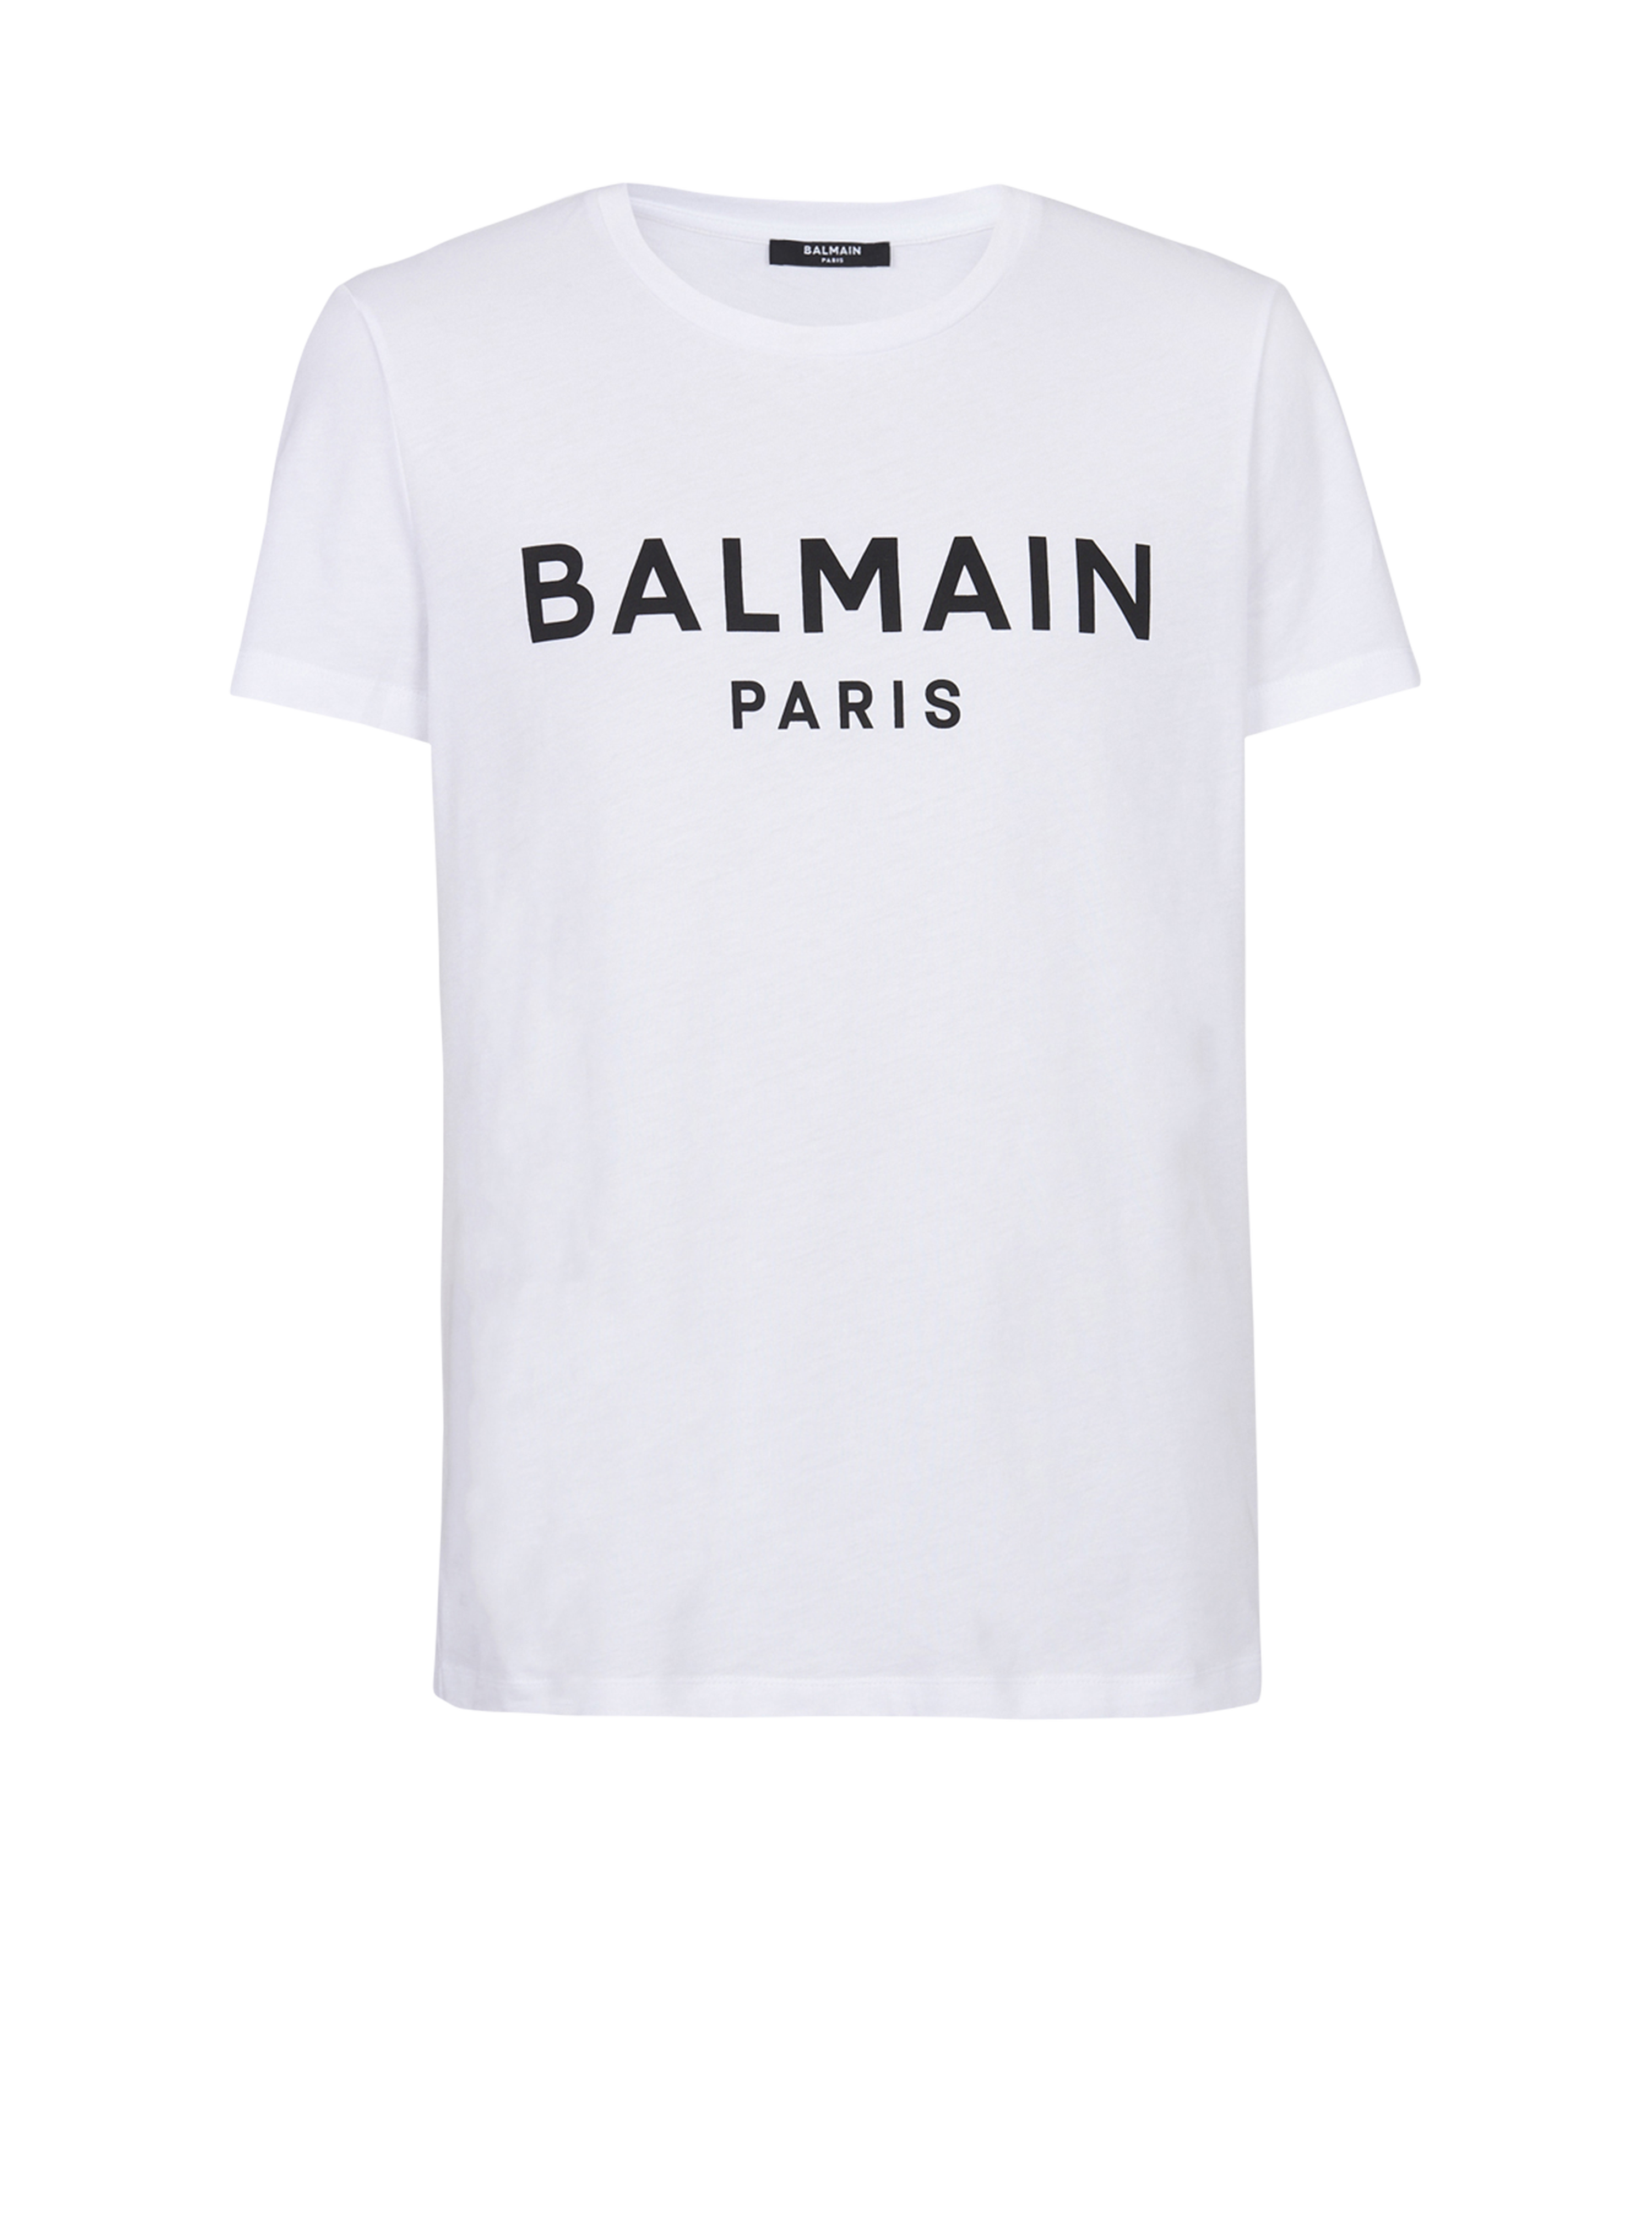 T-shirt in cotone con logo Balmain Paris, bianco